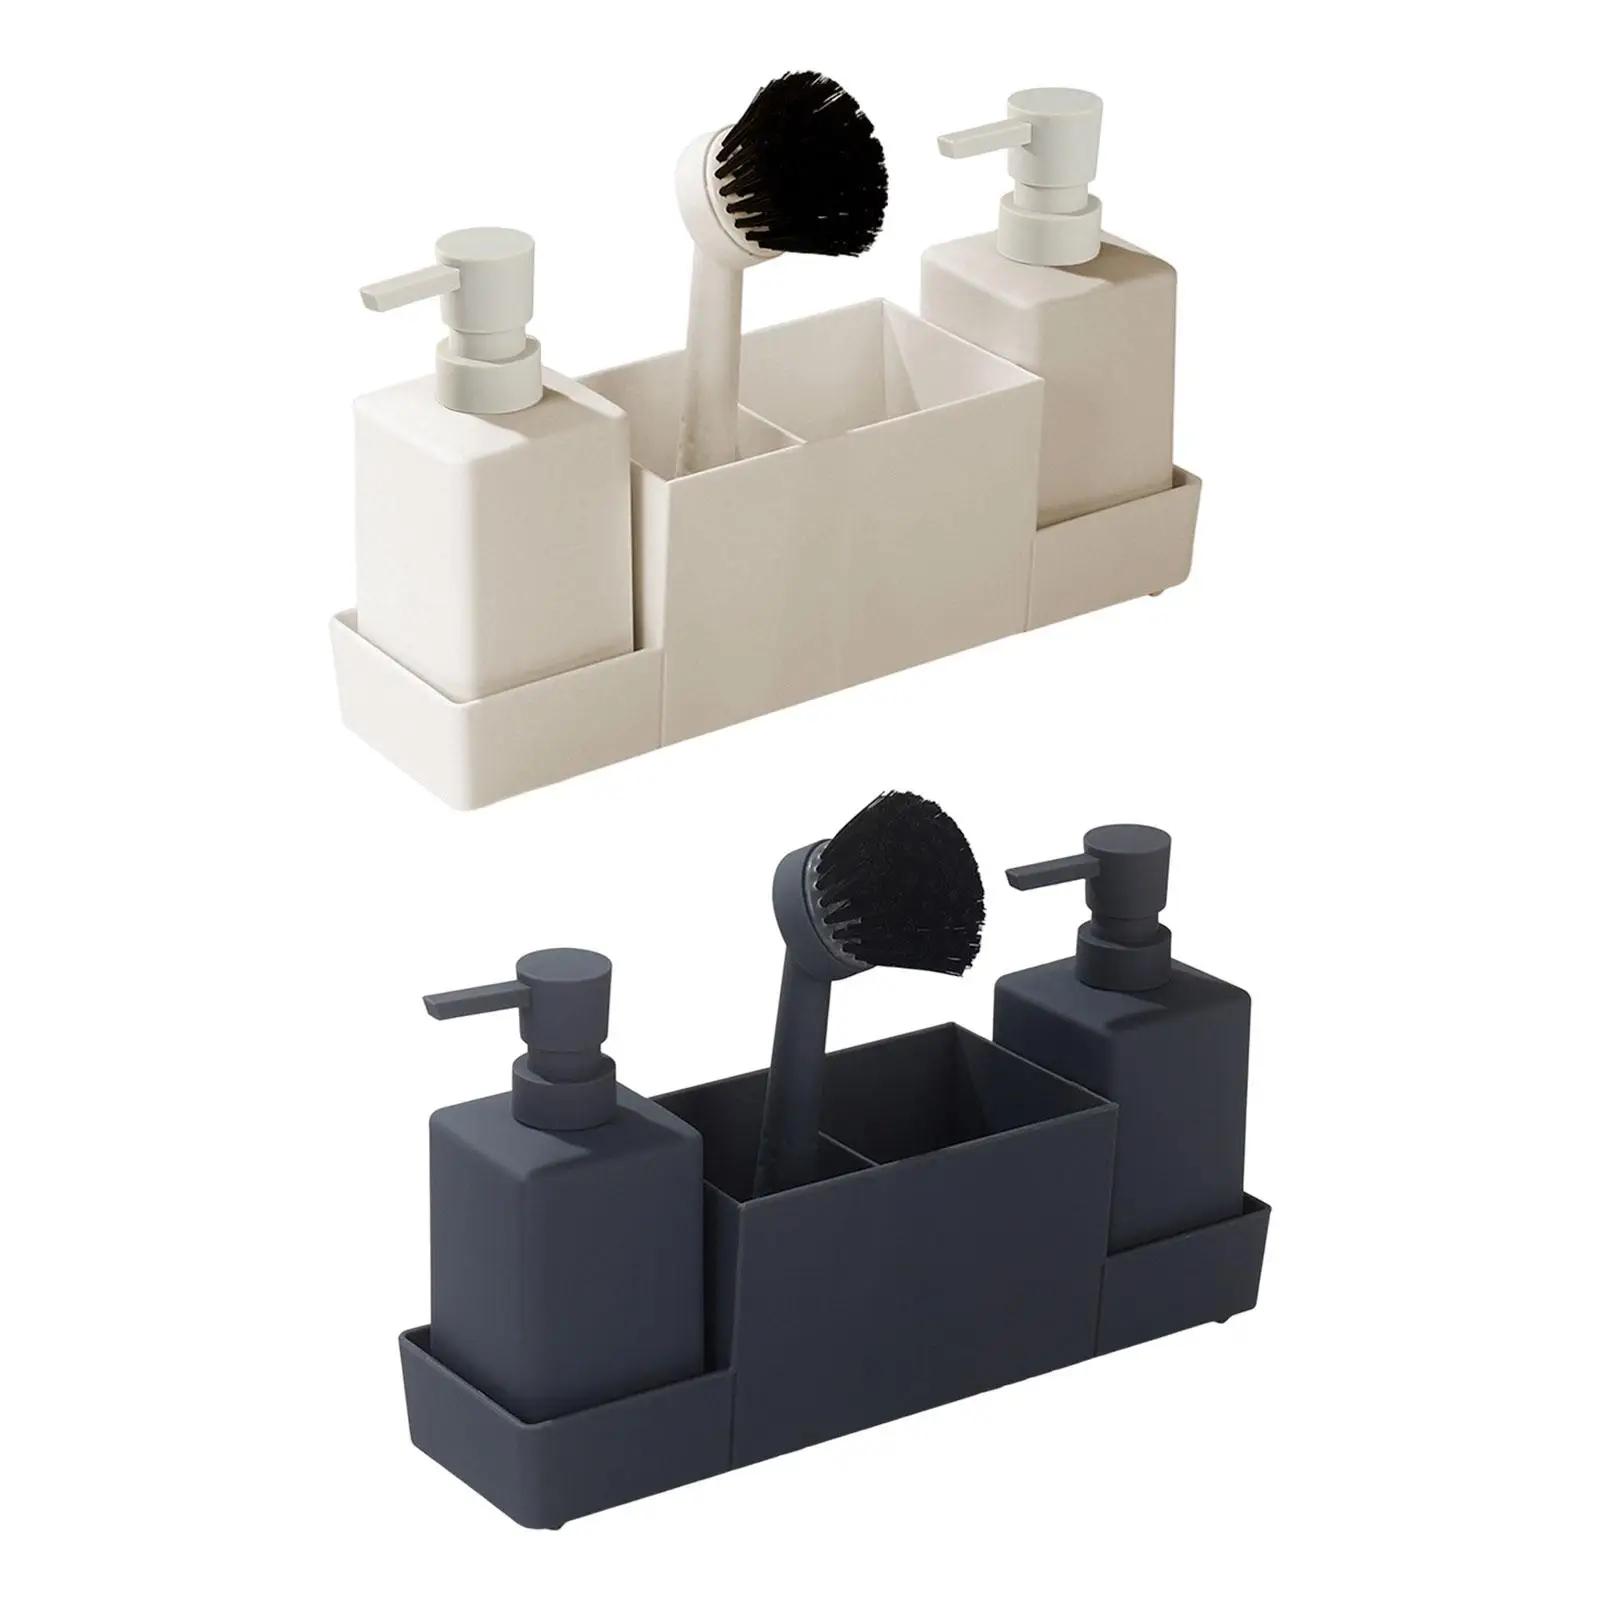 4x Liquid Hand Soap Dispenser Multifunctional Scrubbers Portable Non Slip Kitchen Soap Dispenser with Sponge Holder for Bathroom